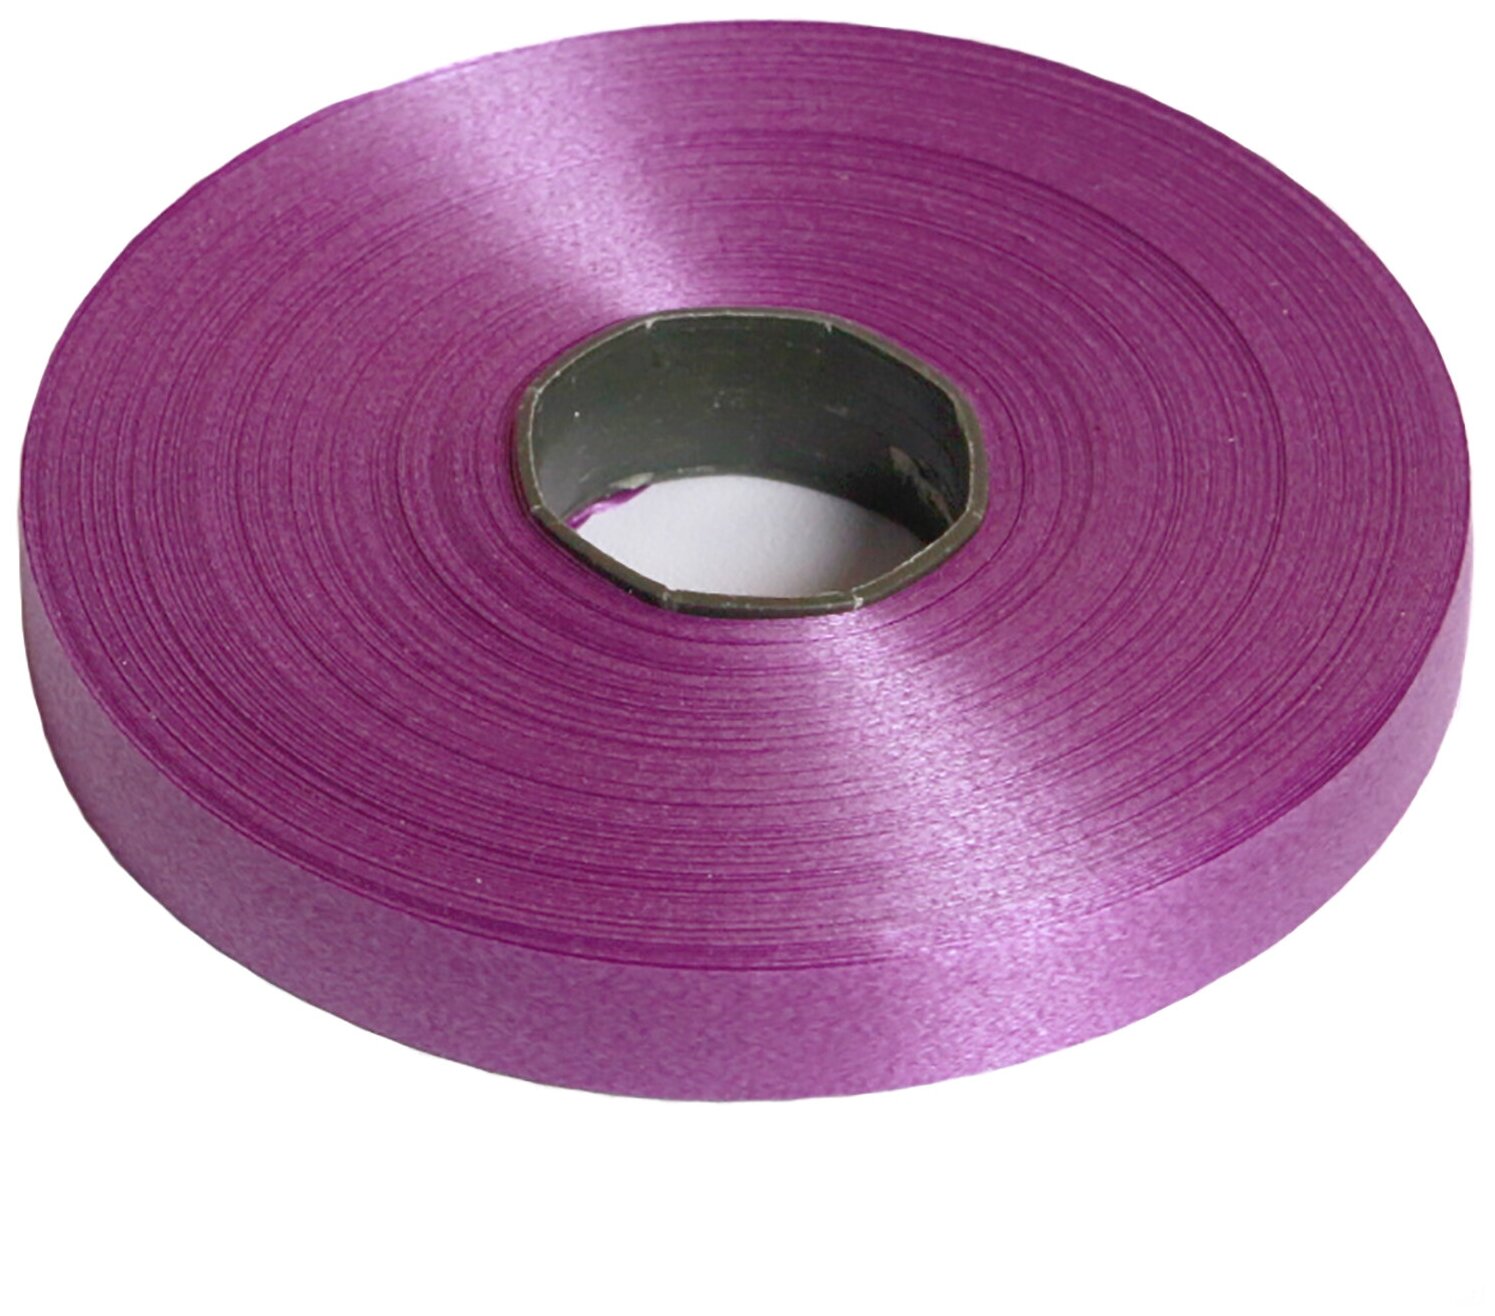 Декоративная лента, цвет фиолетовый, 1,2 см, длина 30 м, размер катушки 9х9х1,2 см